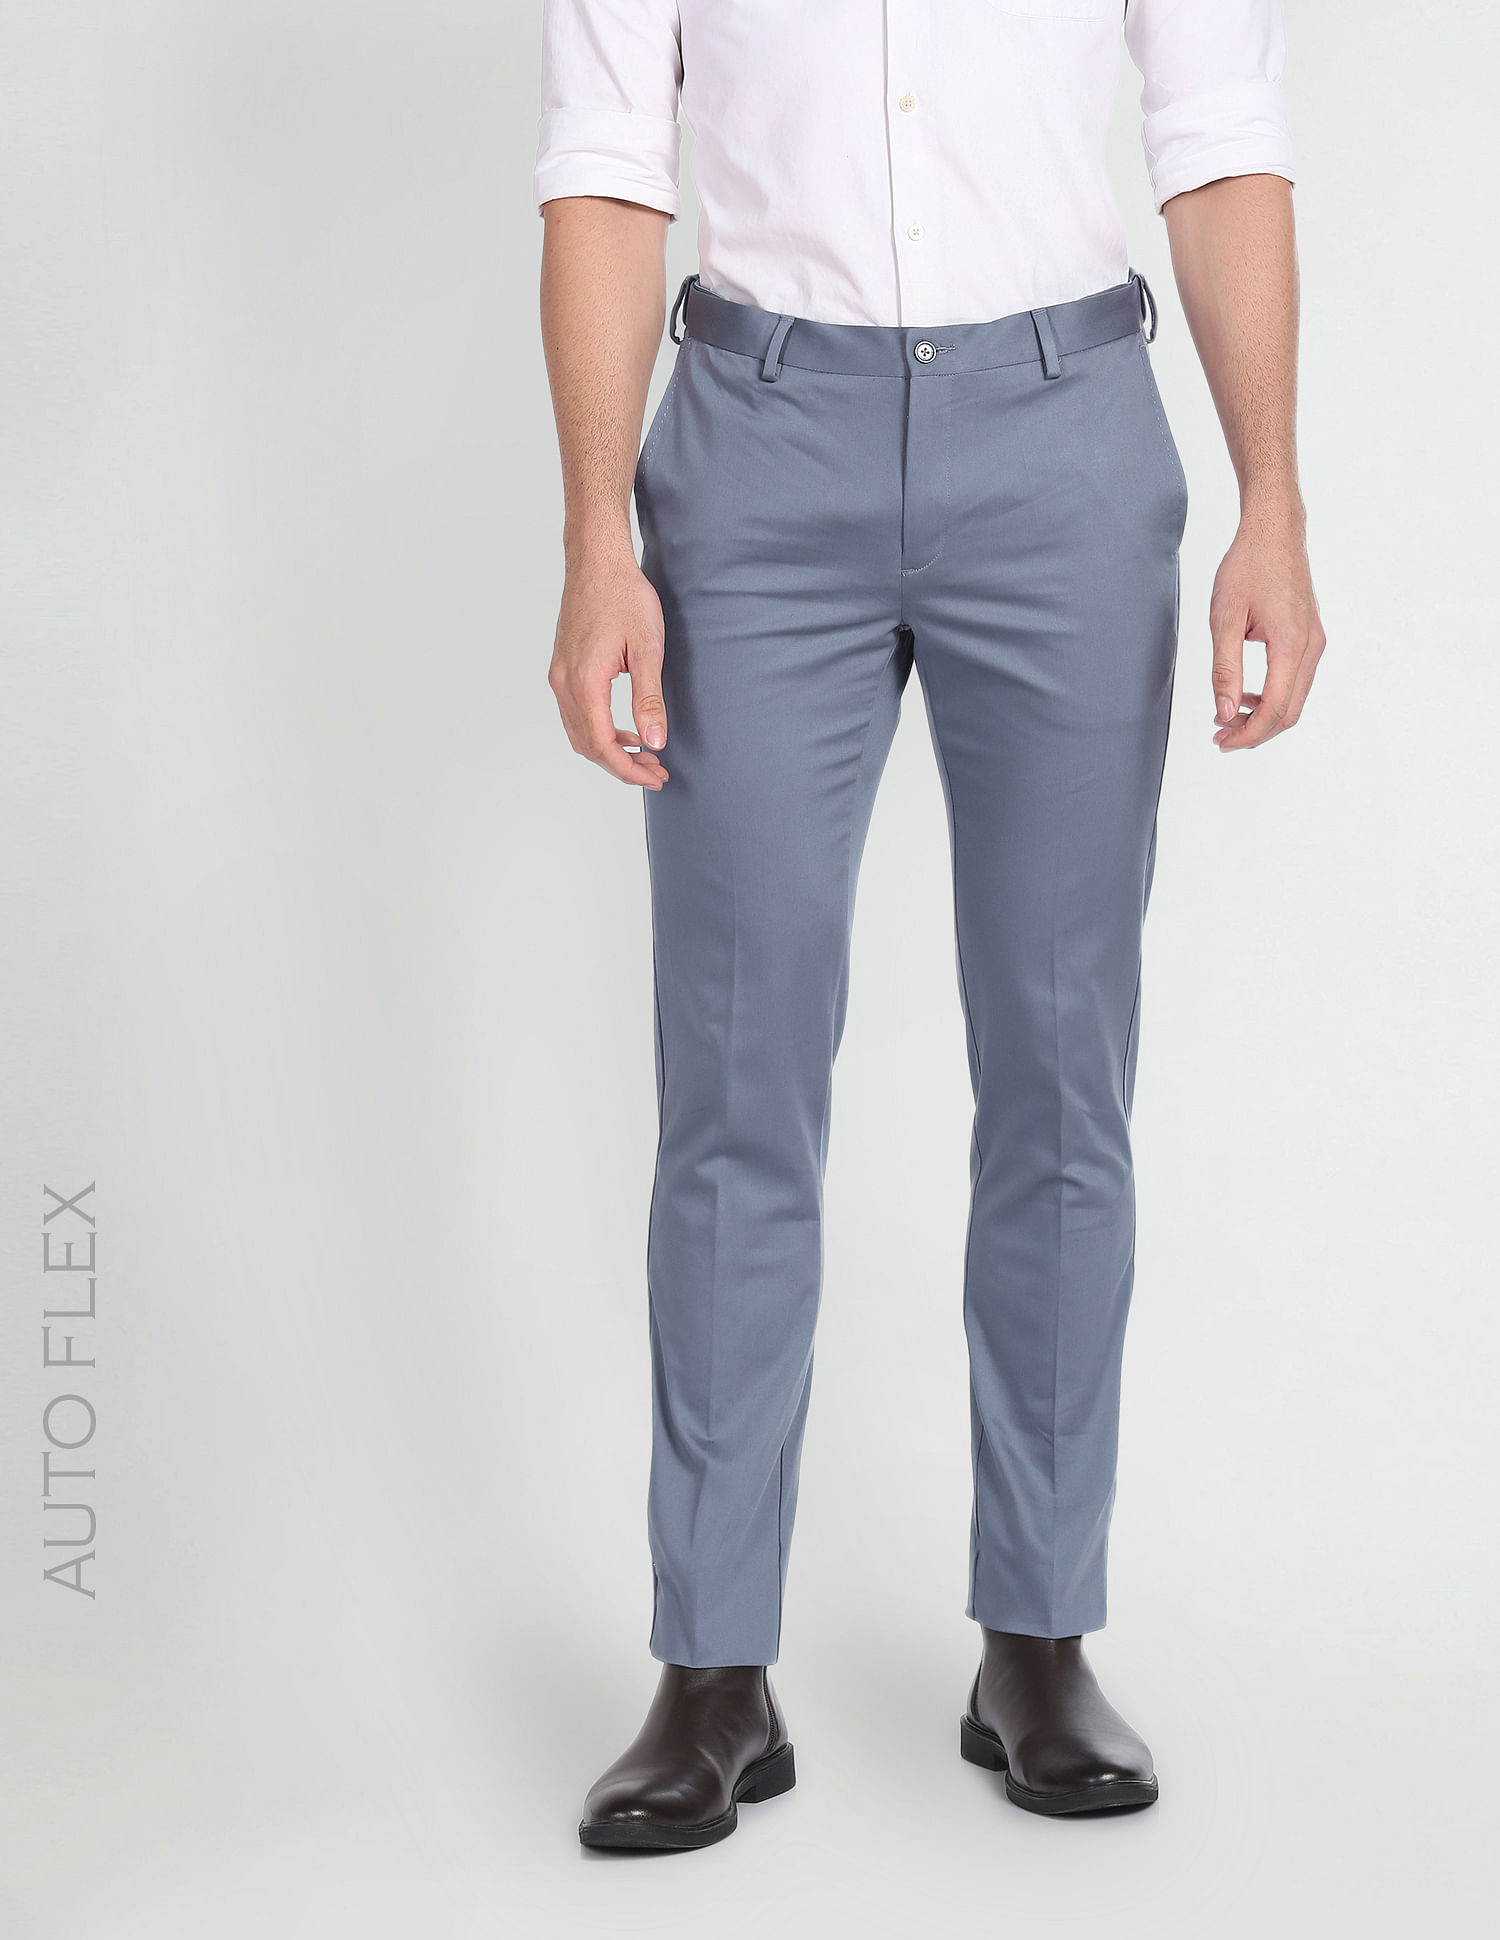 Buy Arrow Autoflex Check Formal Trousers - NNNOW.com